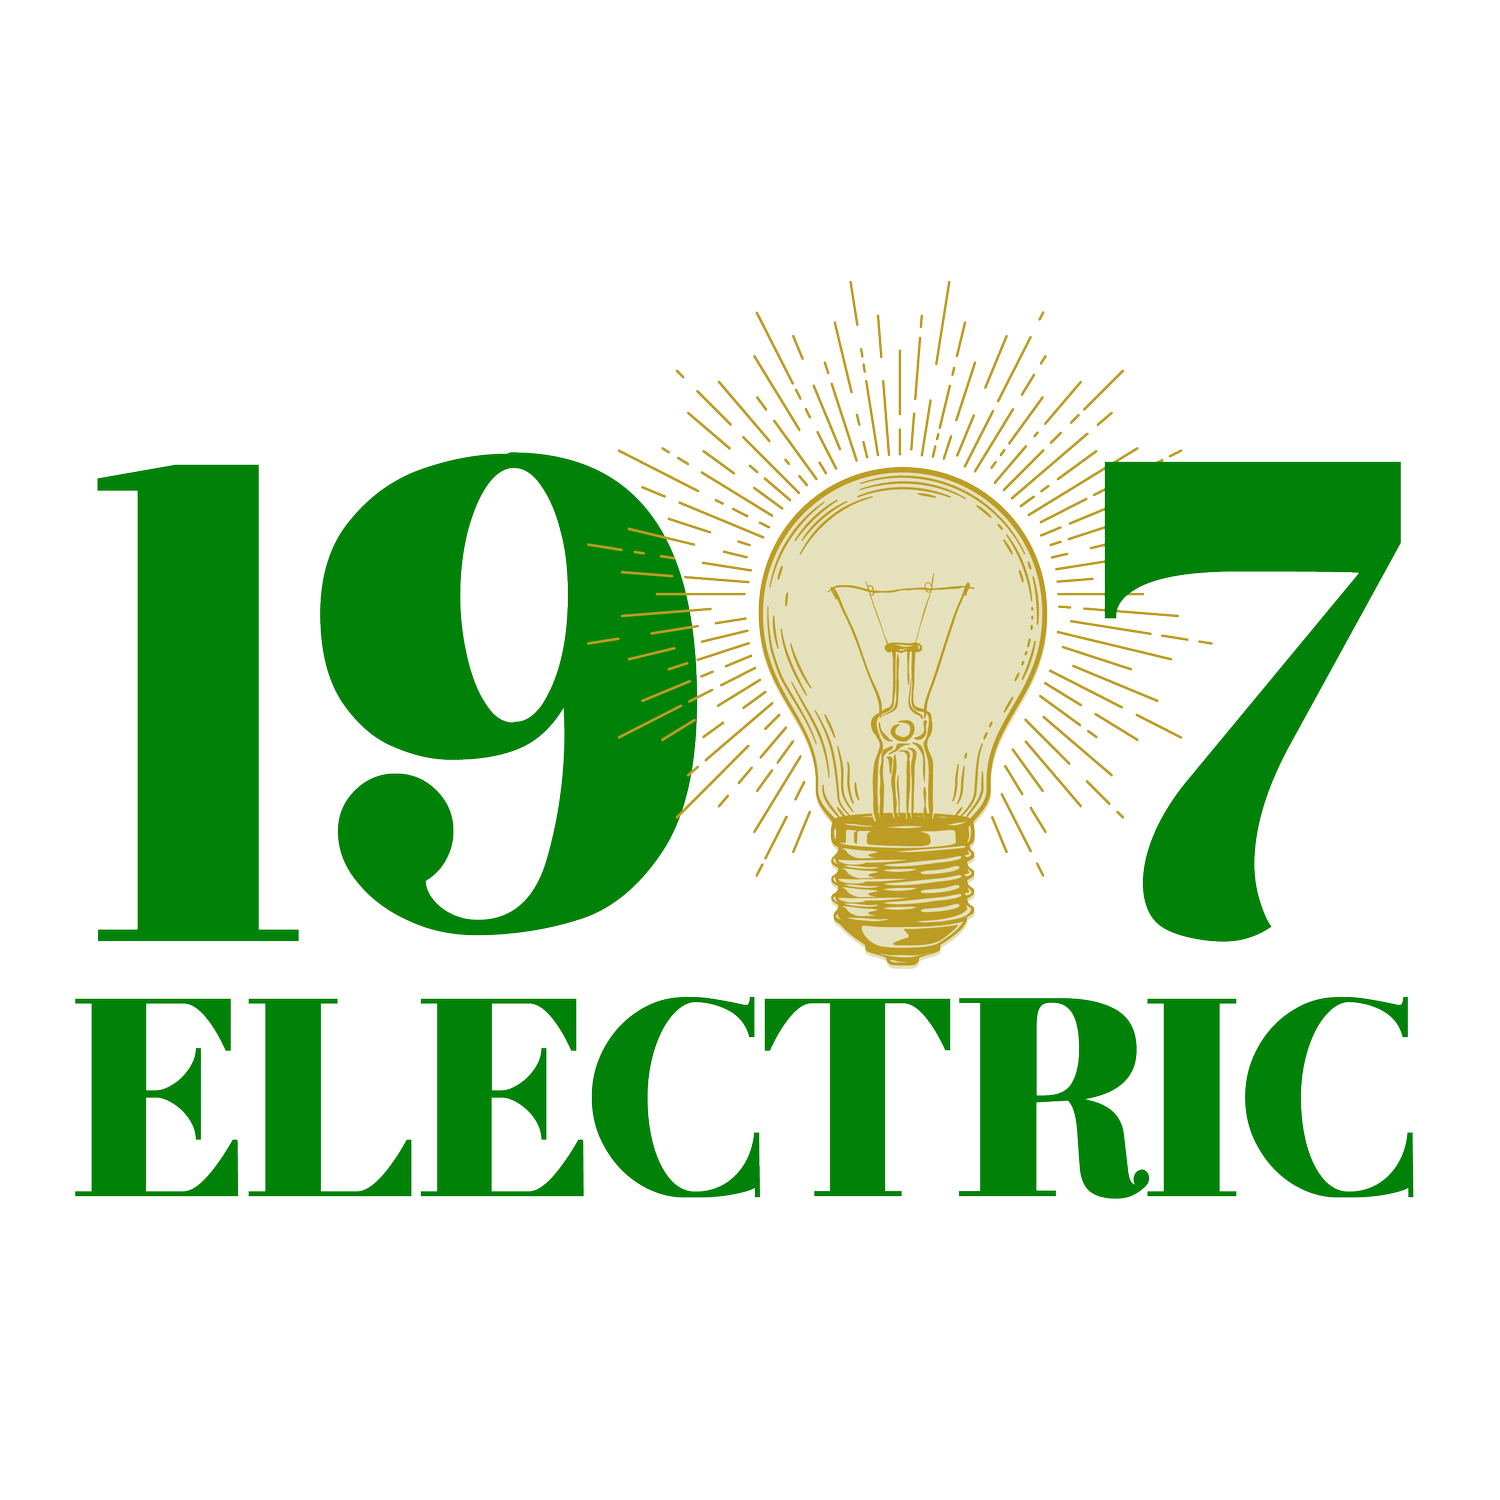 1907 Electric